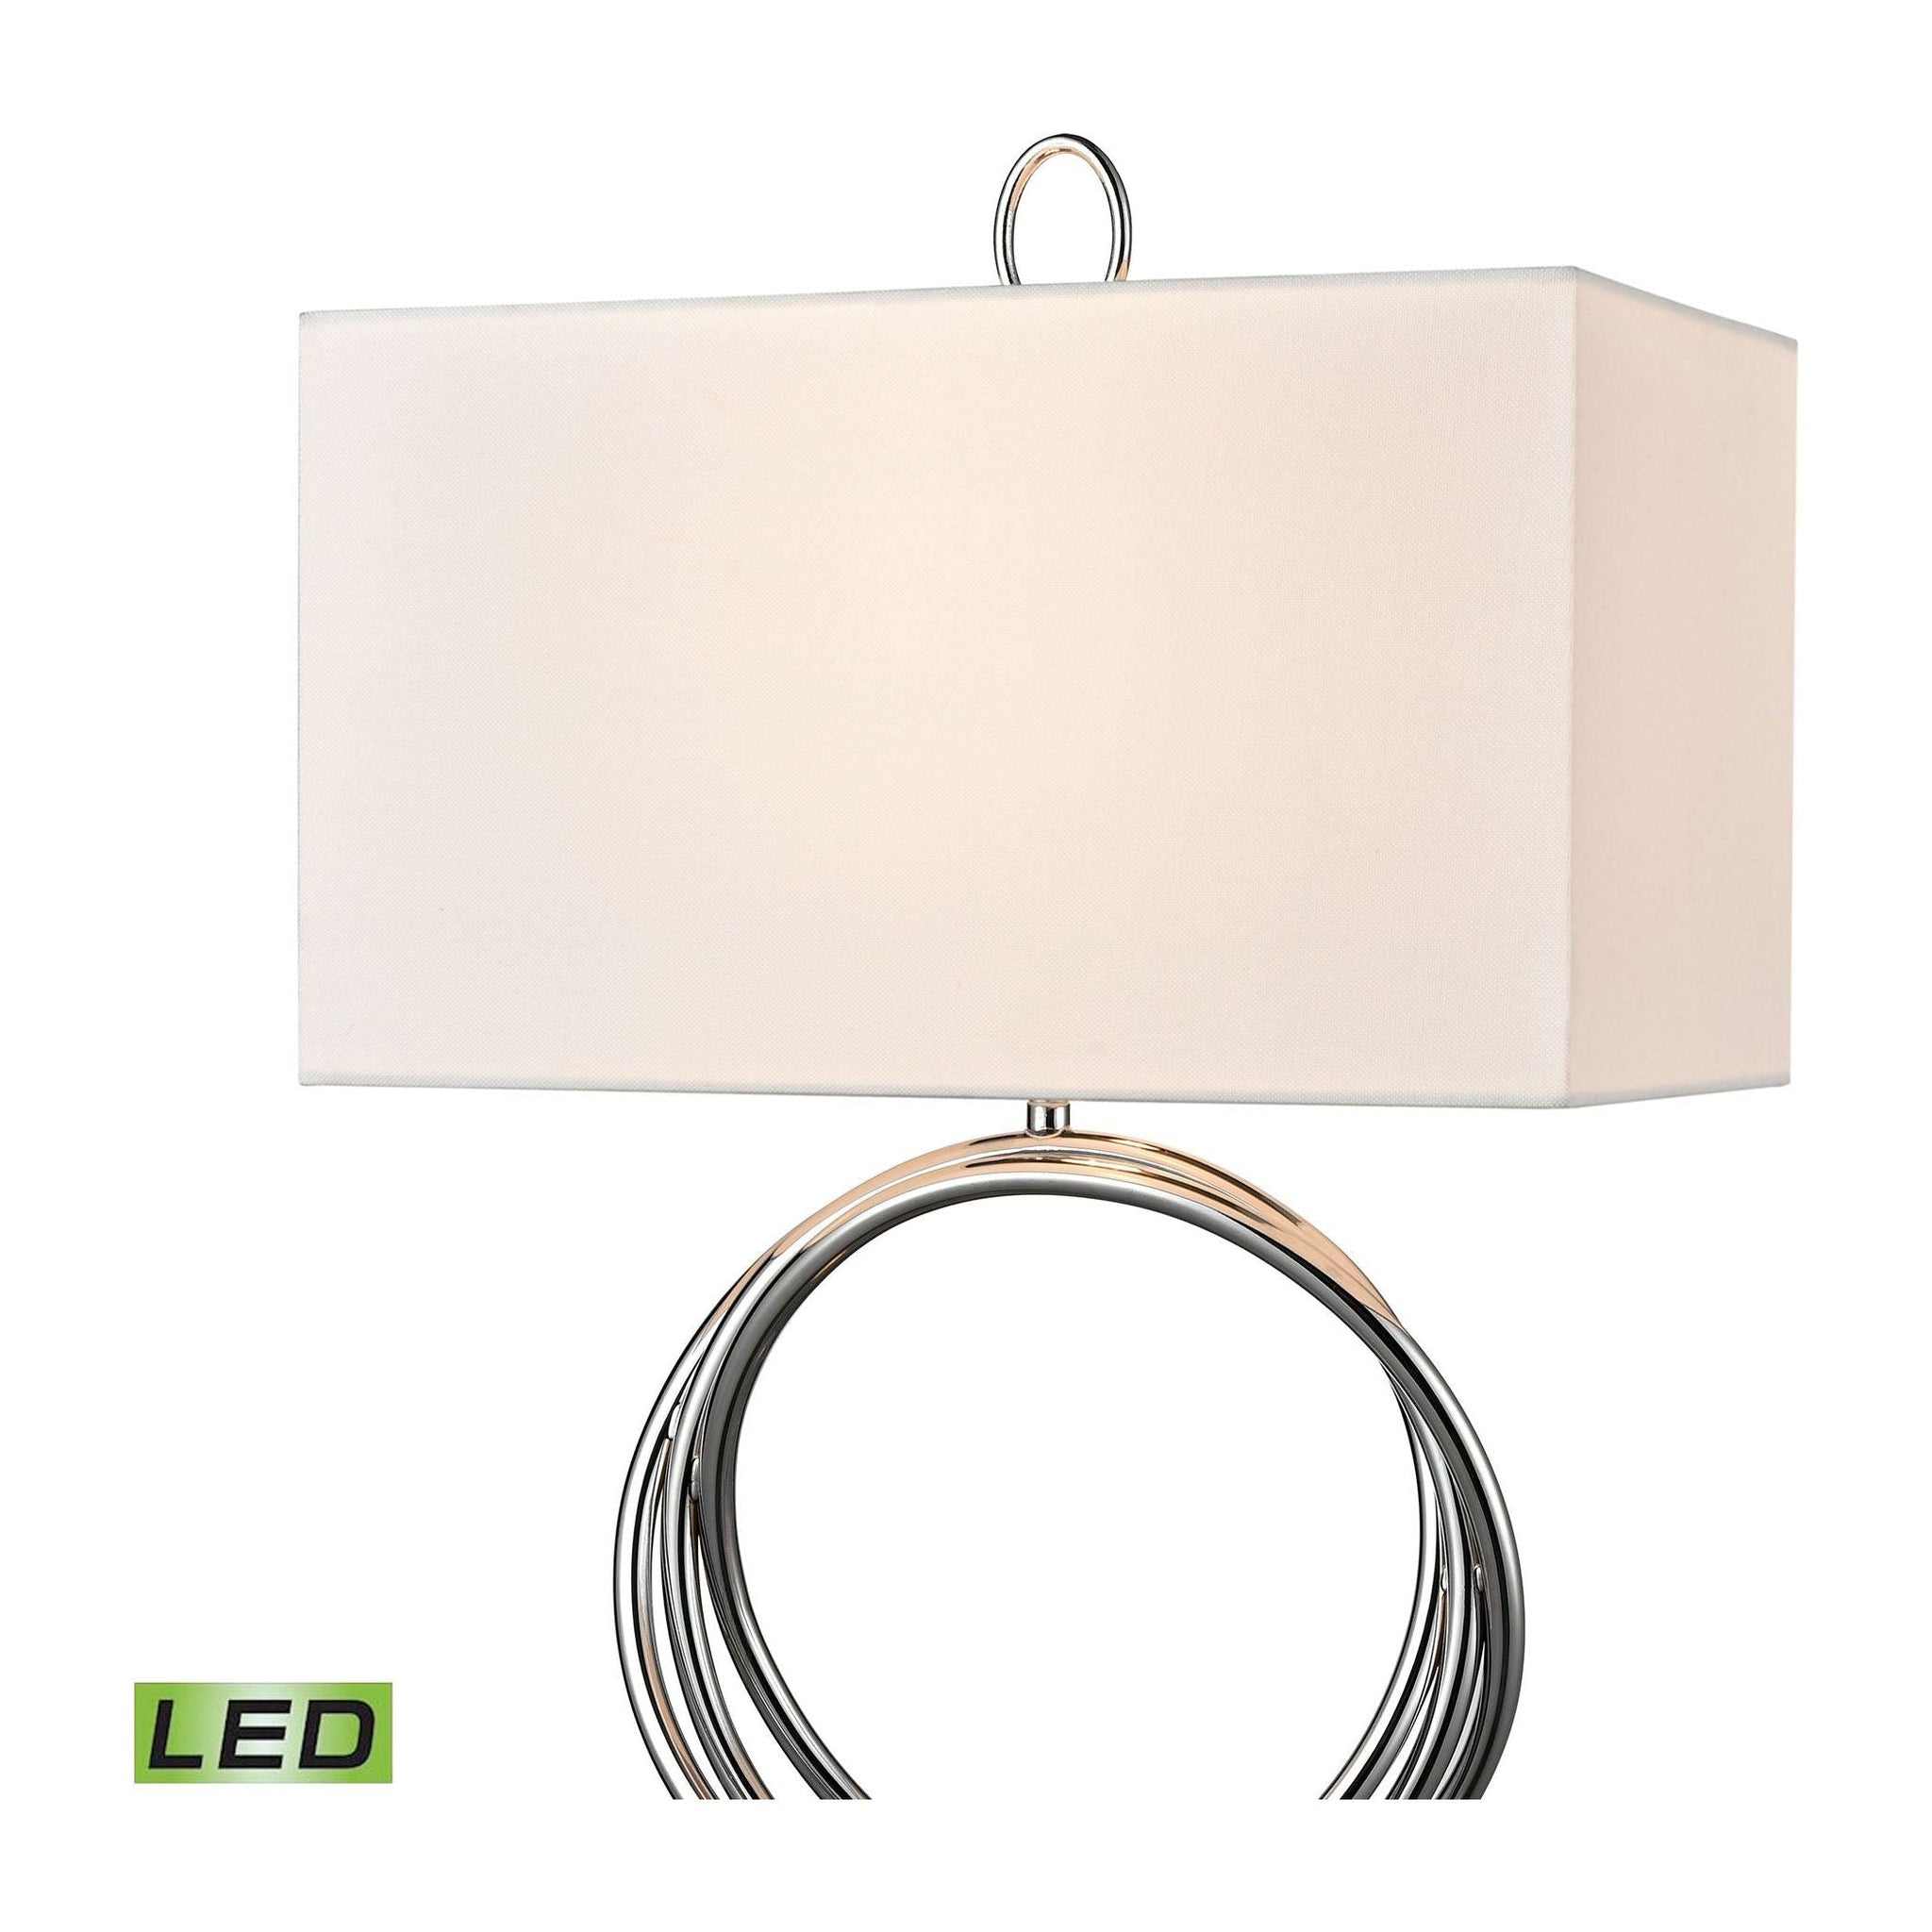 Eero 24" High 1-Light Table Lamp